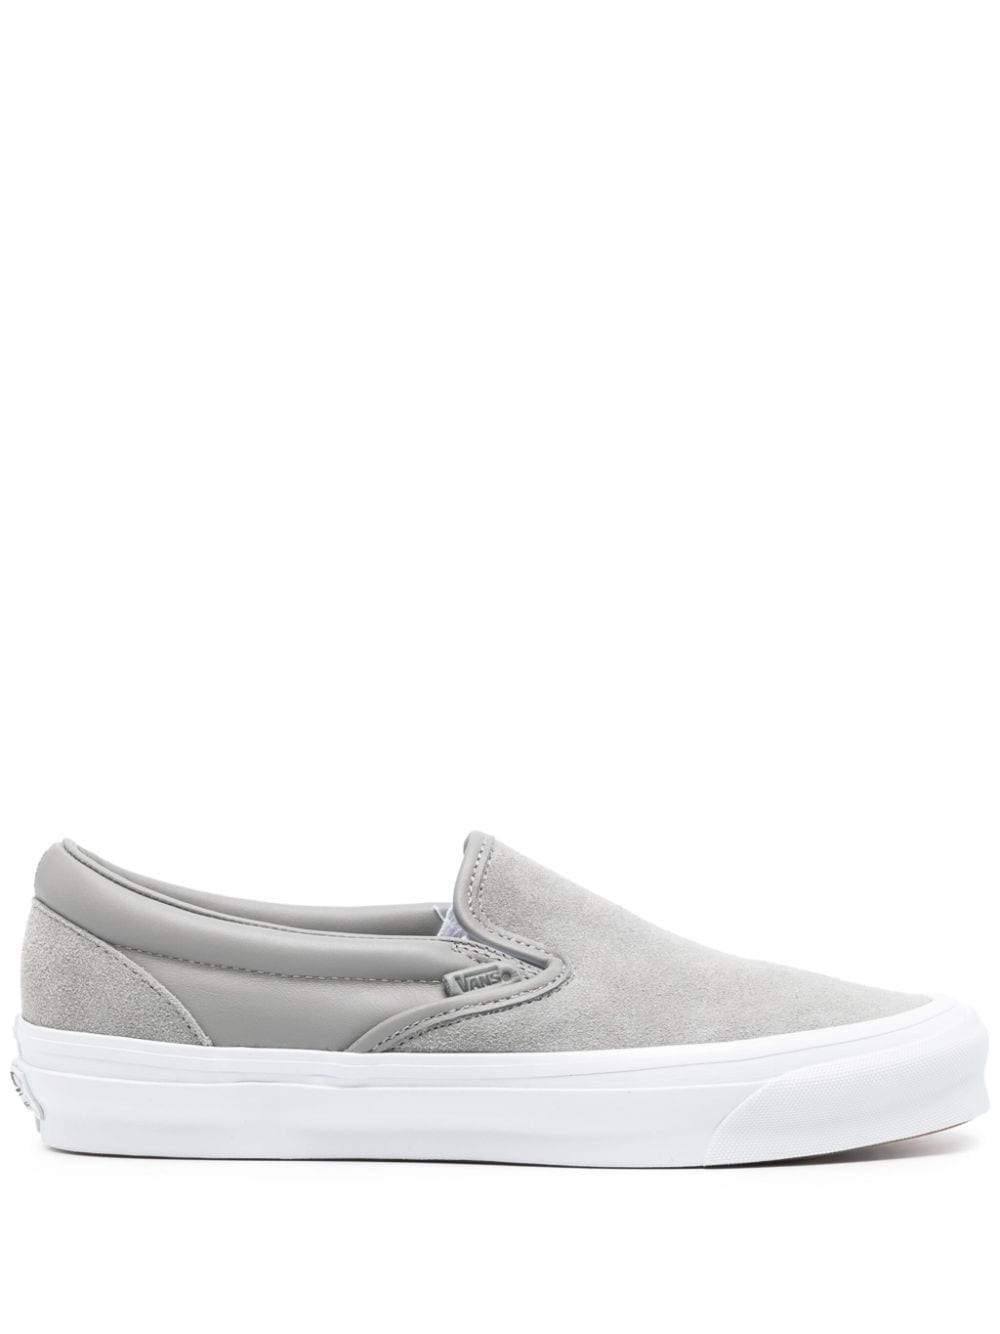 Vans Og Classic Slip On Lx Vault Sneakers In Grey